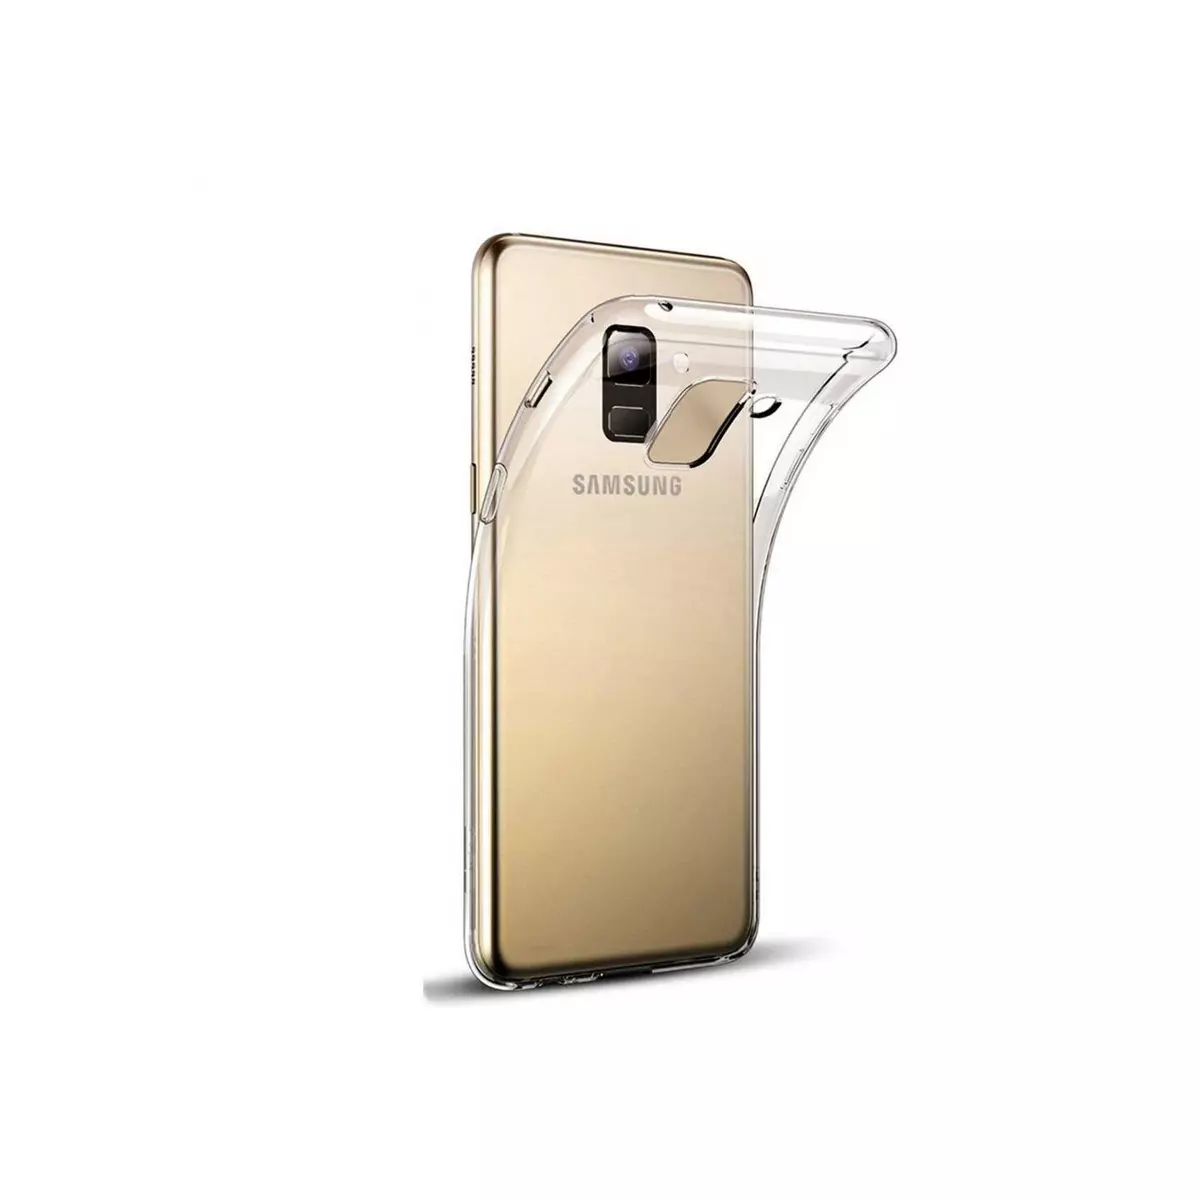 amahousse Coque Galaxy A8+ 2018 souple transparente ultra fine